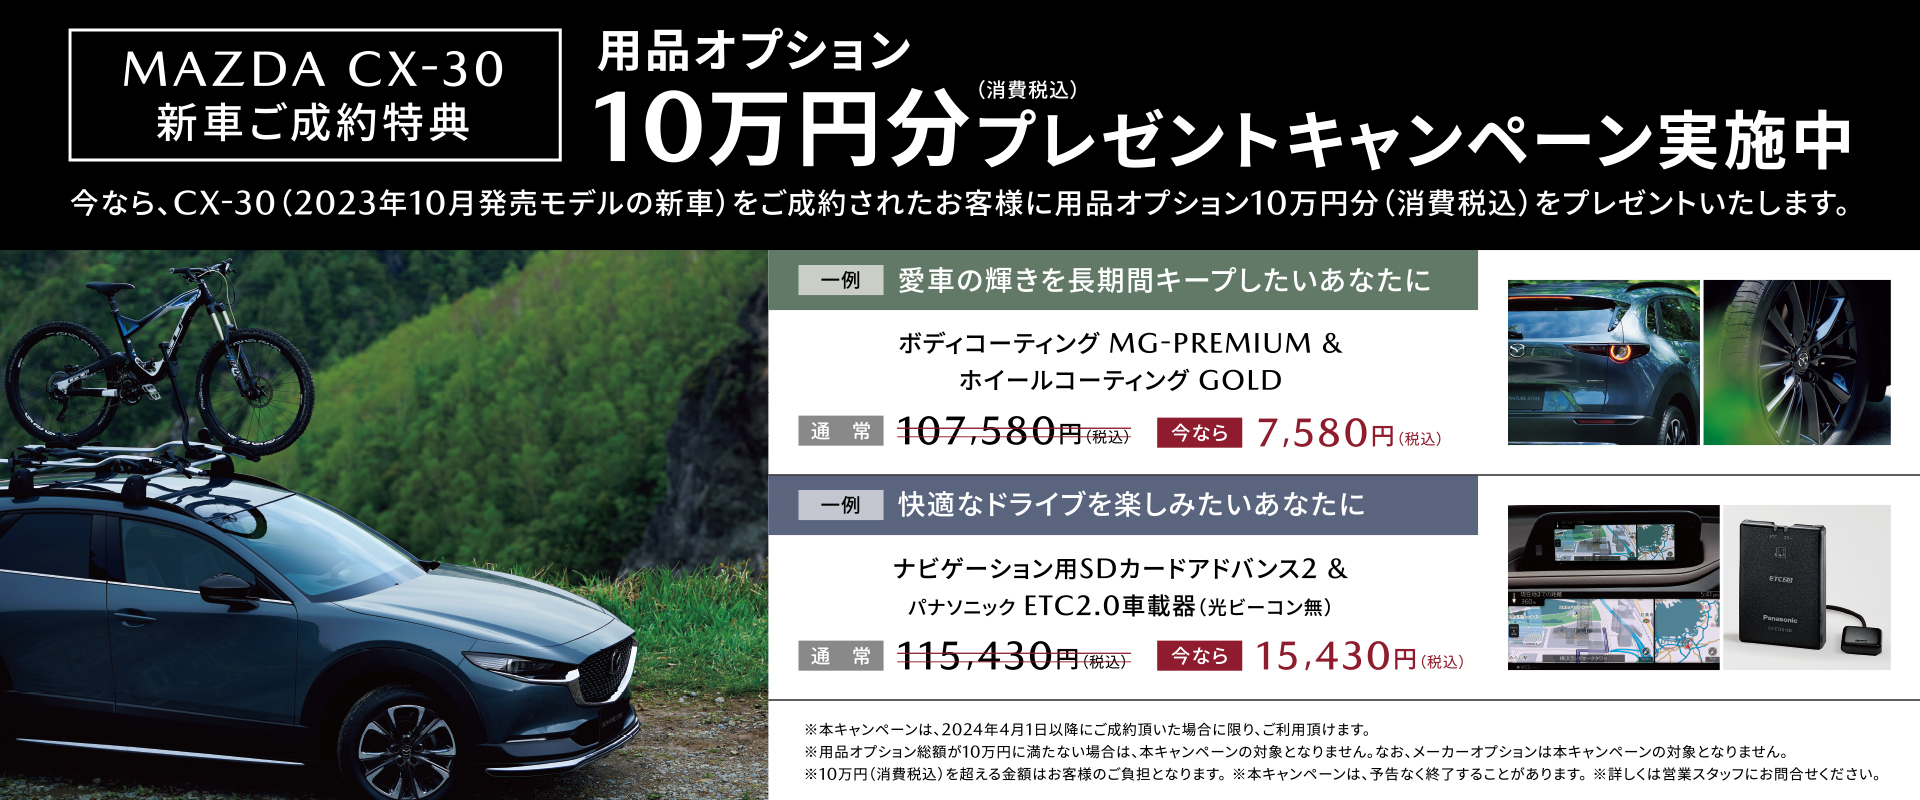 CX-30 10万円分プレゼントキャンペーン